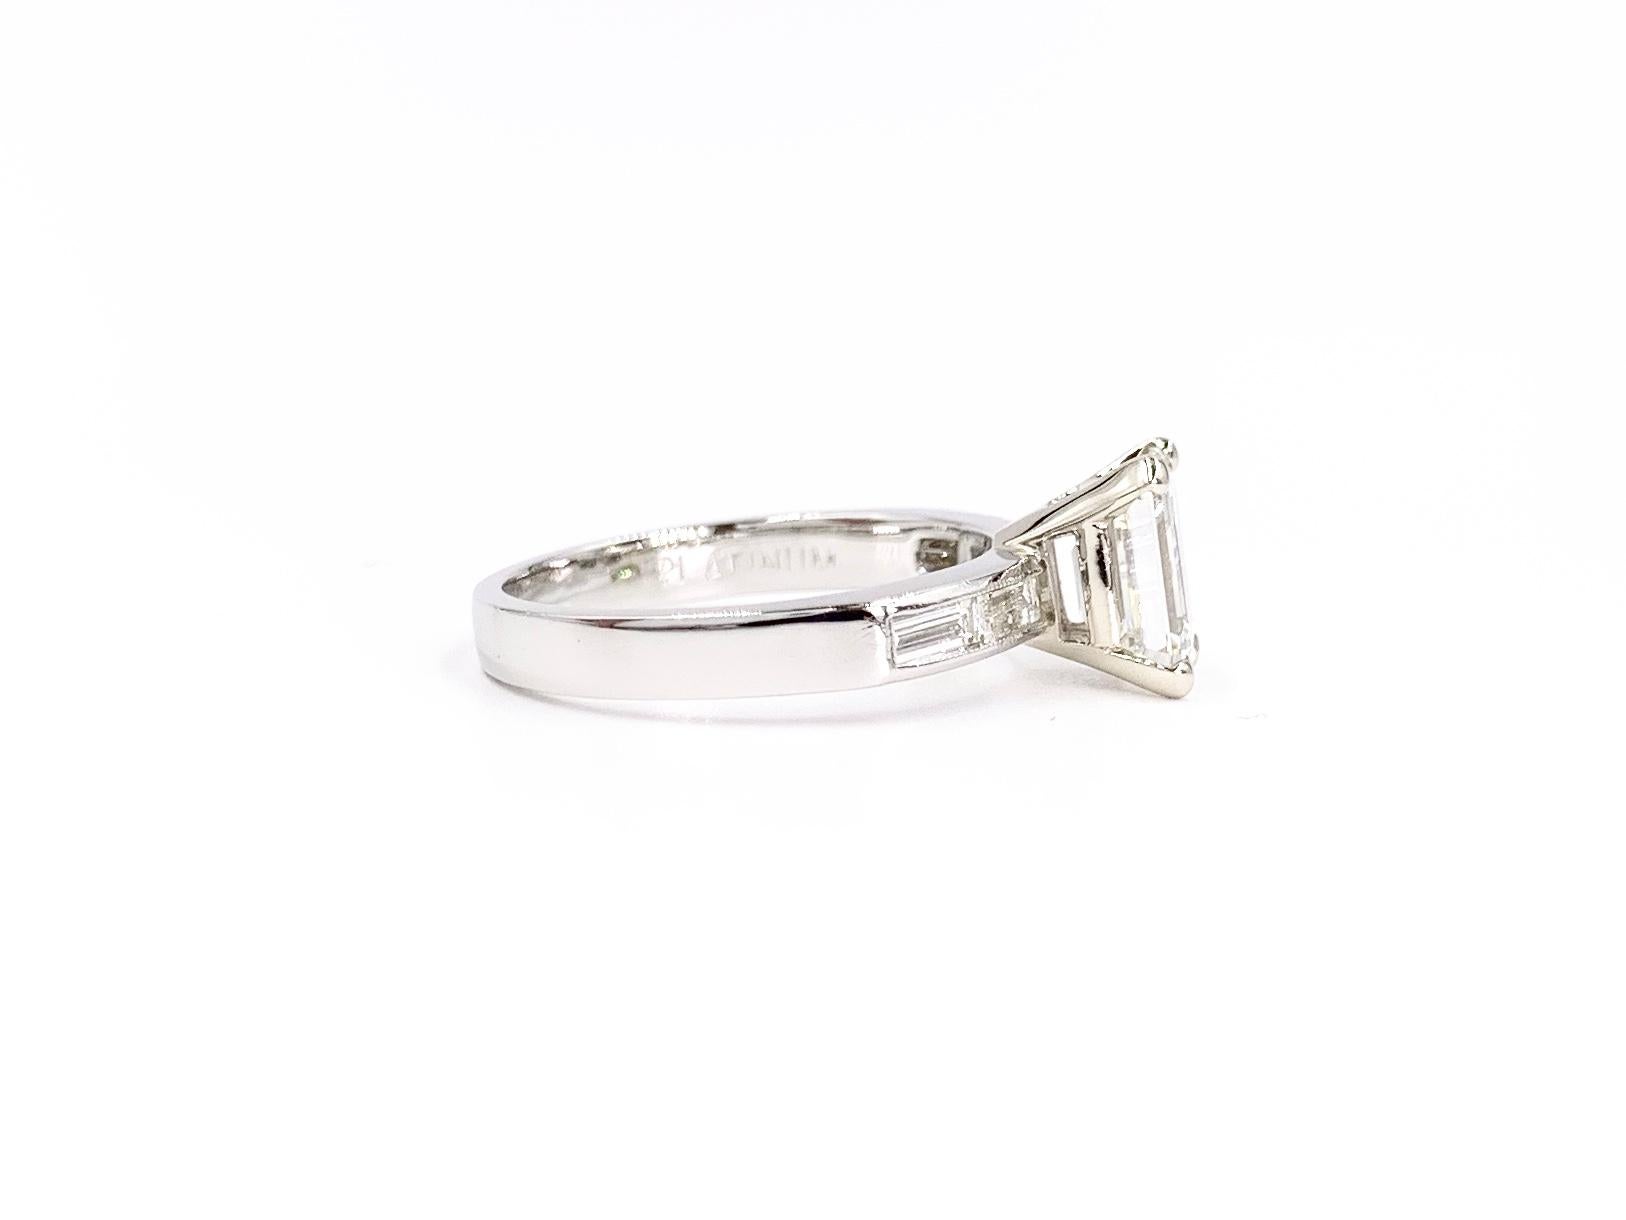 Contemporary GIA Certified 1.41 Carat Emerald Cut Diamond Platinum Engagement Ring